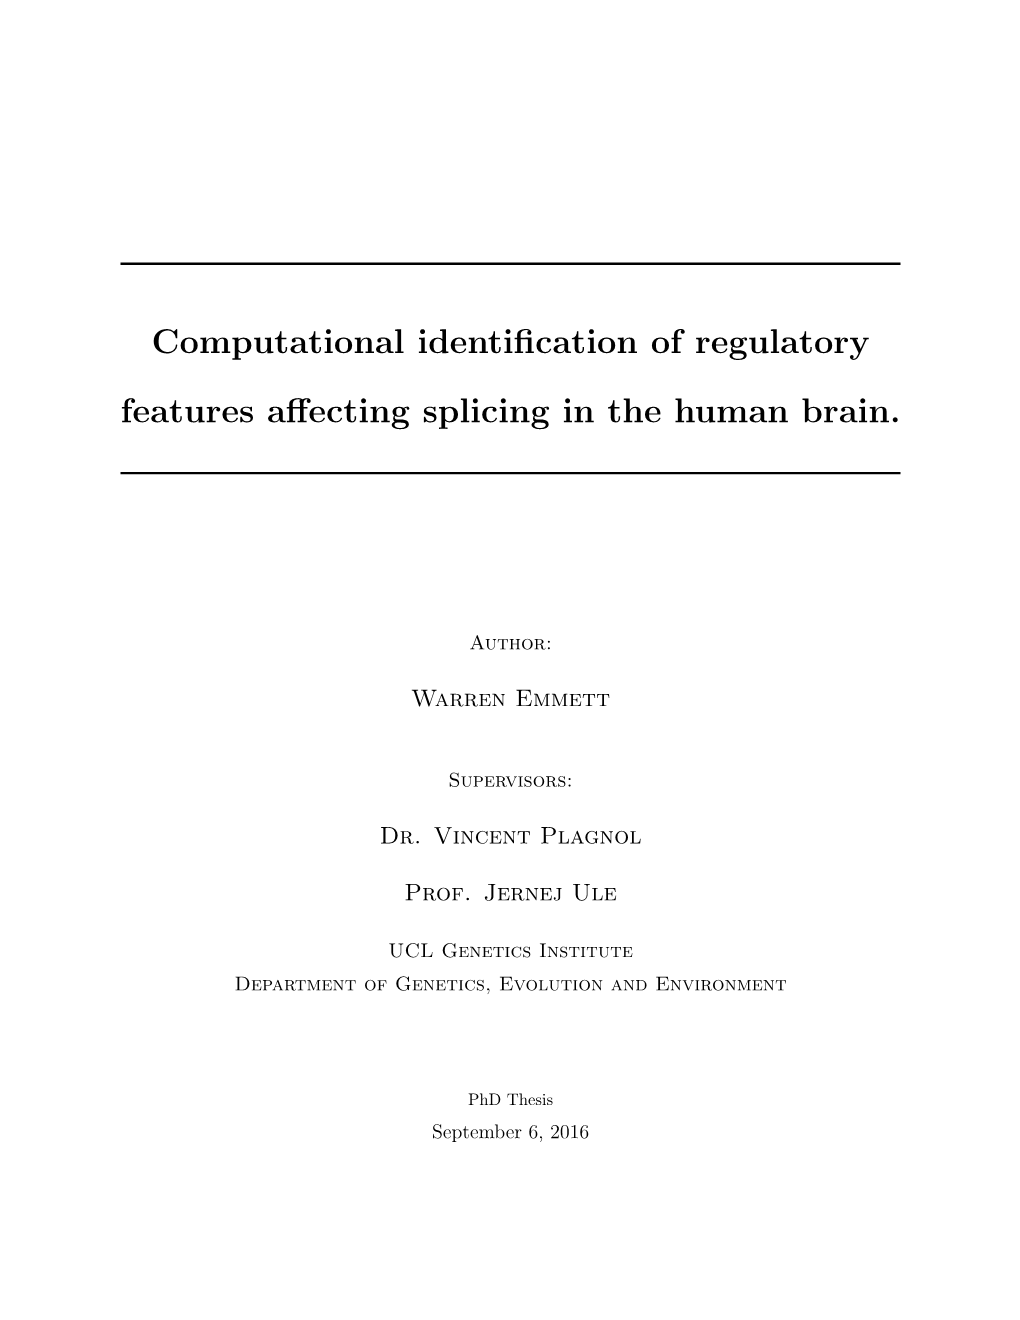 Computational Identification of Regulatory Features Affecting